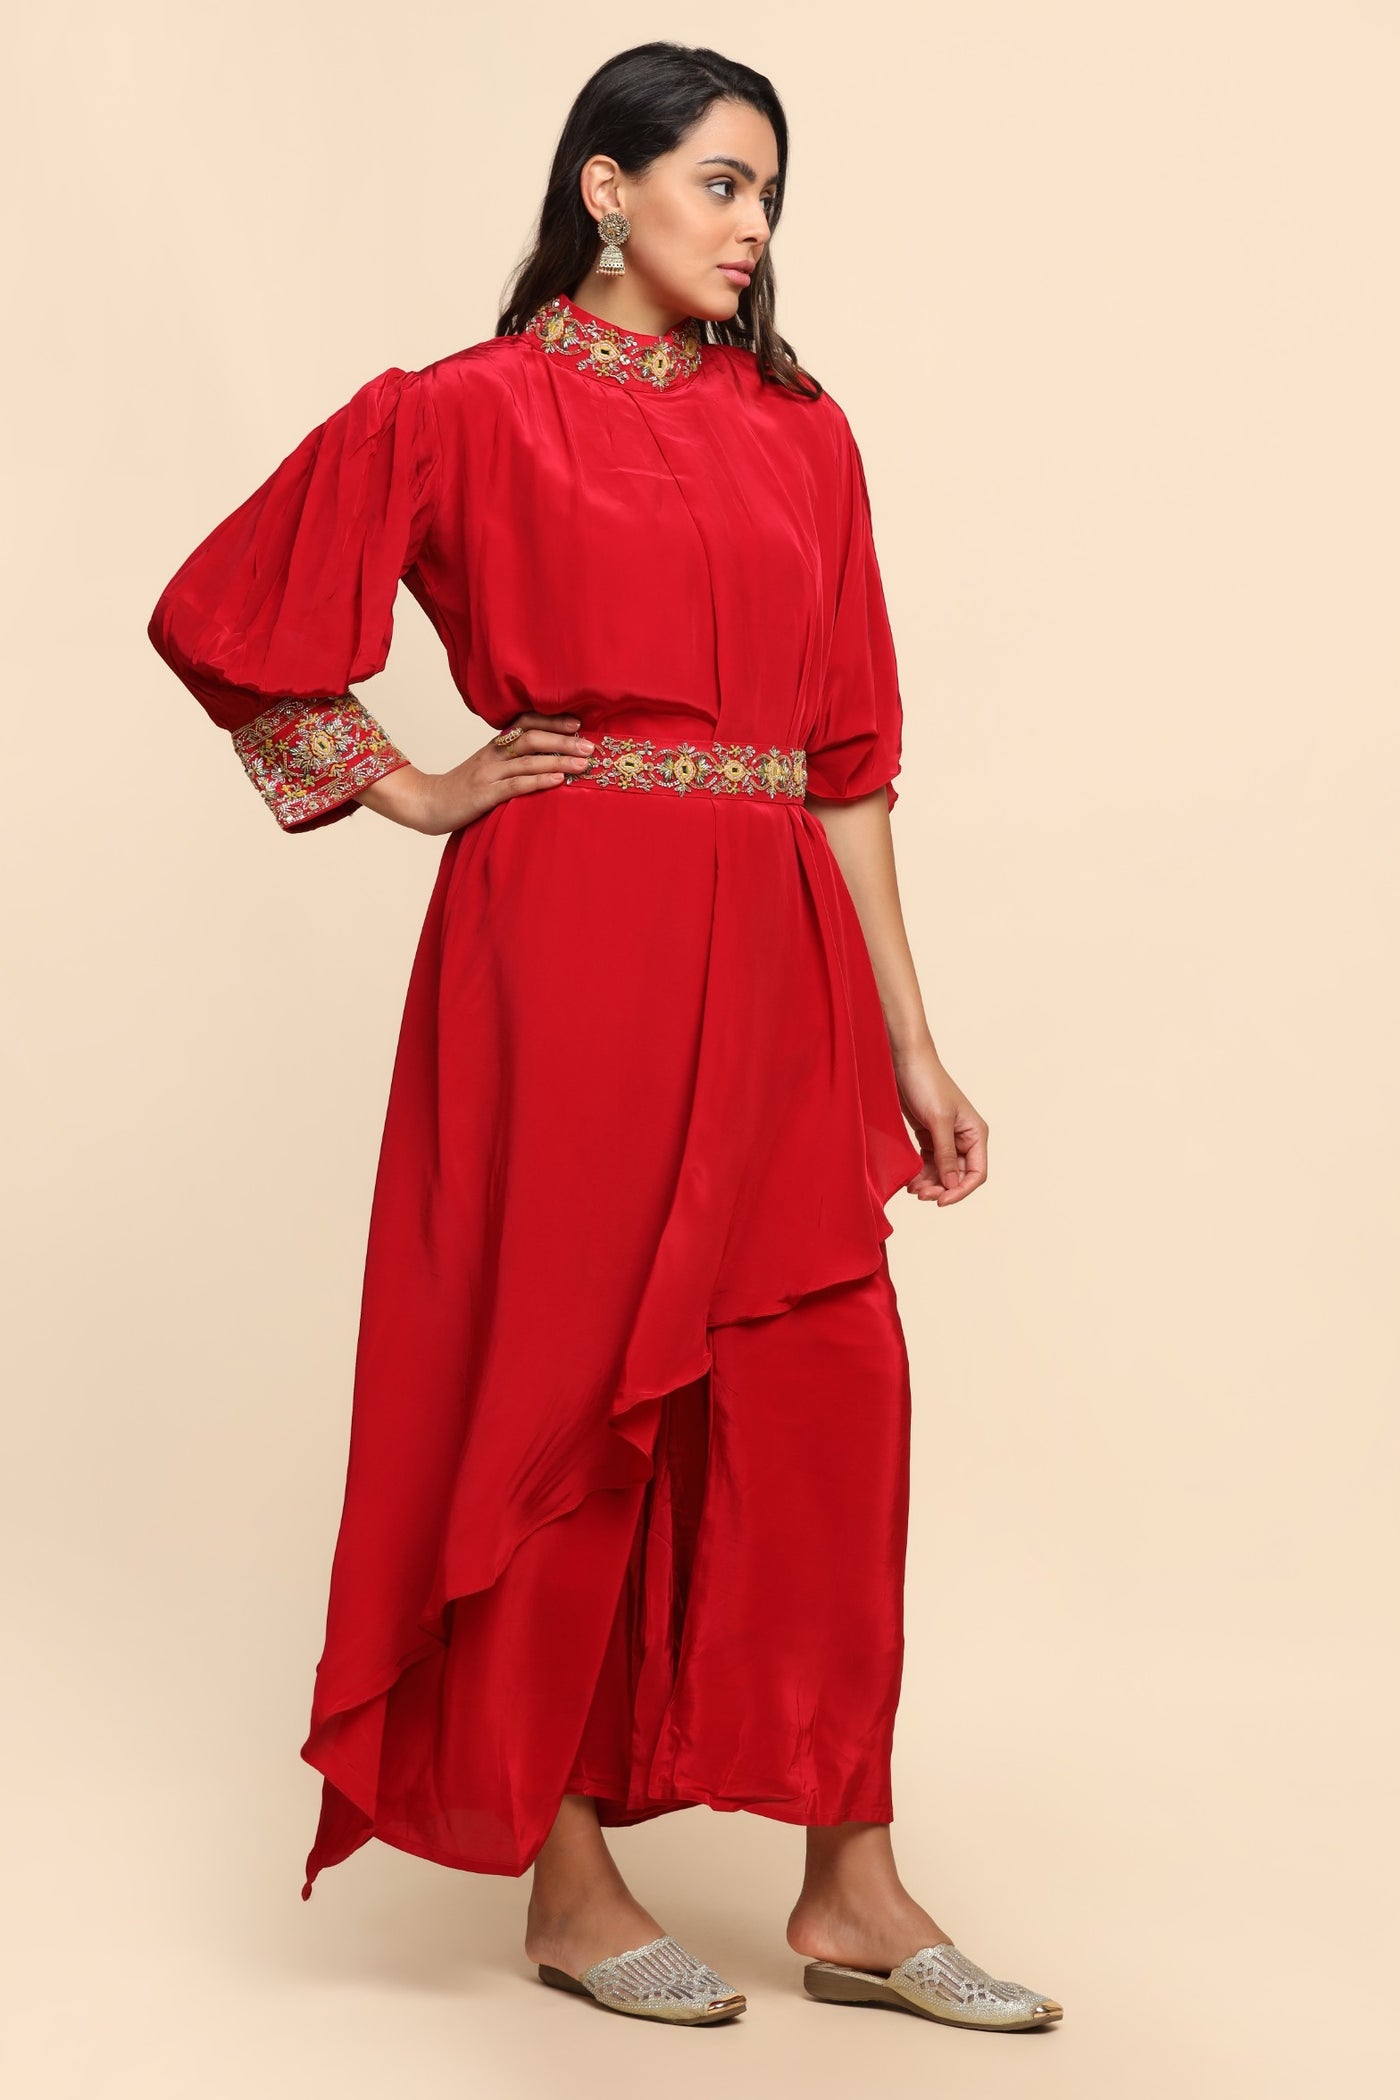 Gorgeous red color asymmetrical kurti